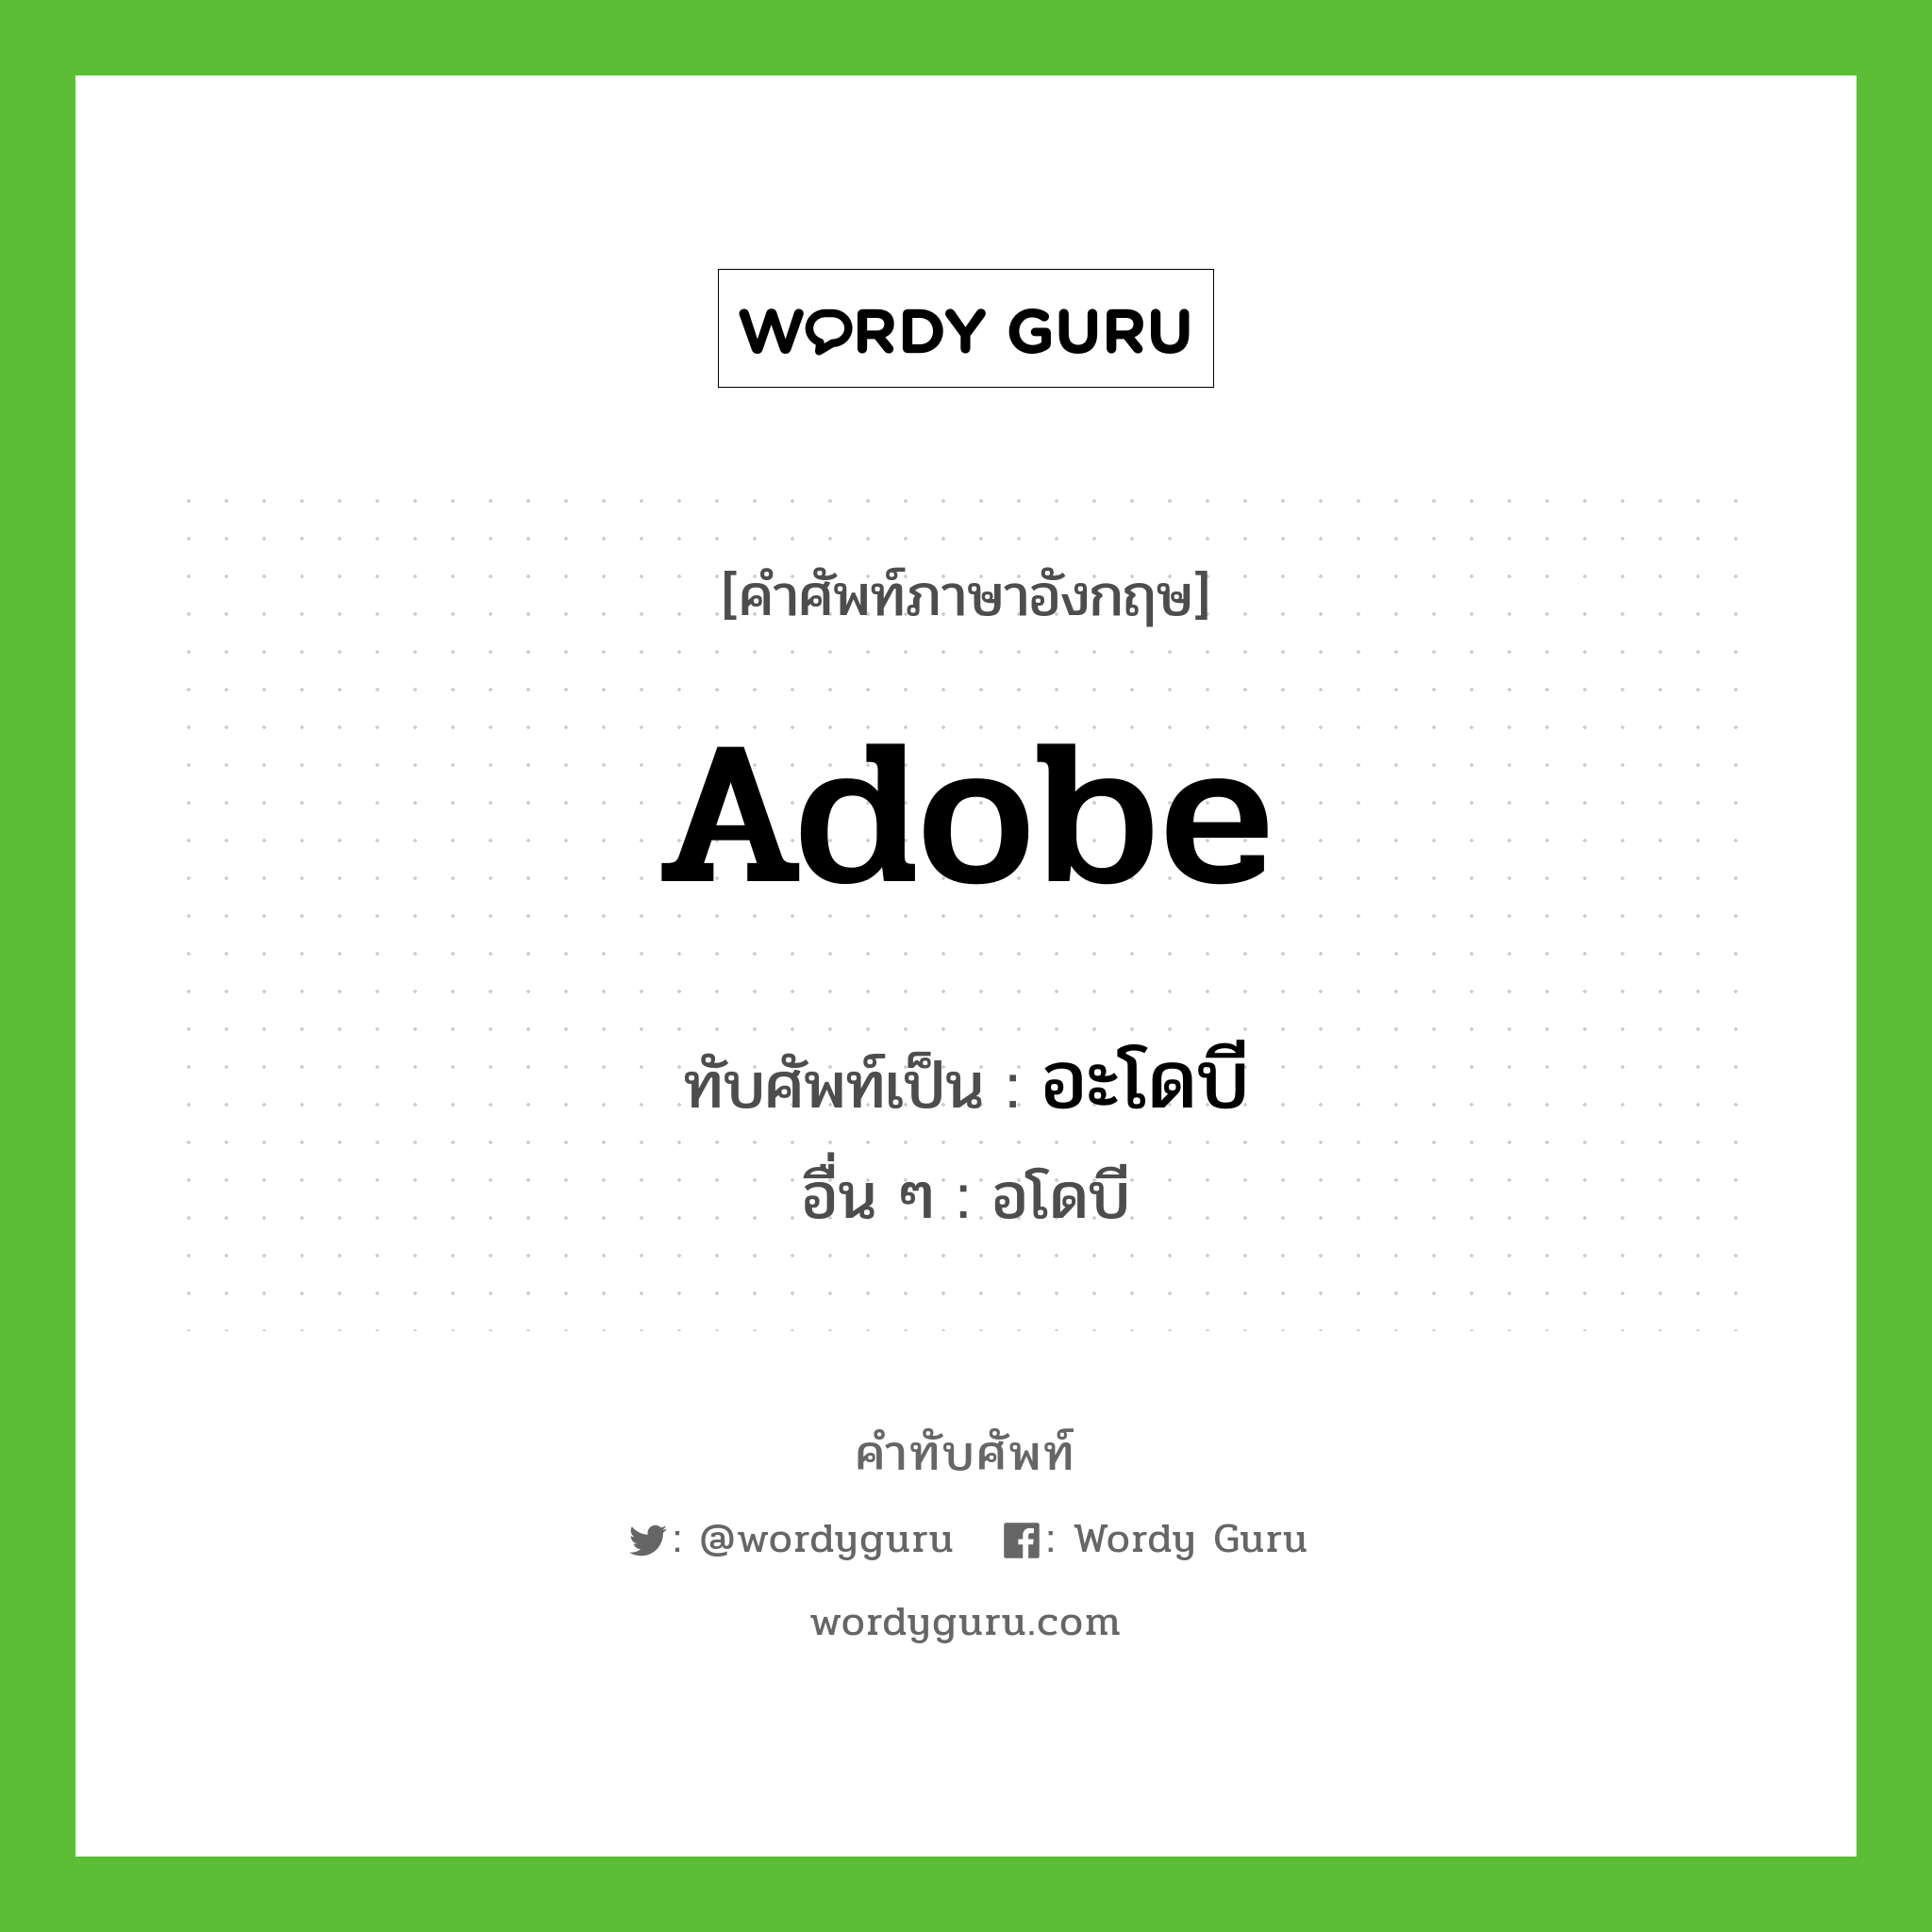 Adobe เขียนเป็นคำไทยว่าอะไร?, คำศัพท์ภาษาอังกฤษ Adobe ทับศัพท์เป็น อะโดบี อื่น ๆ อโดบี